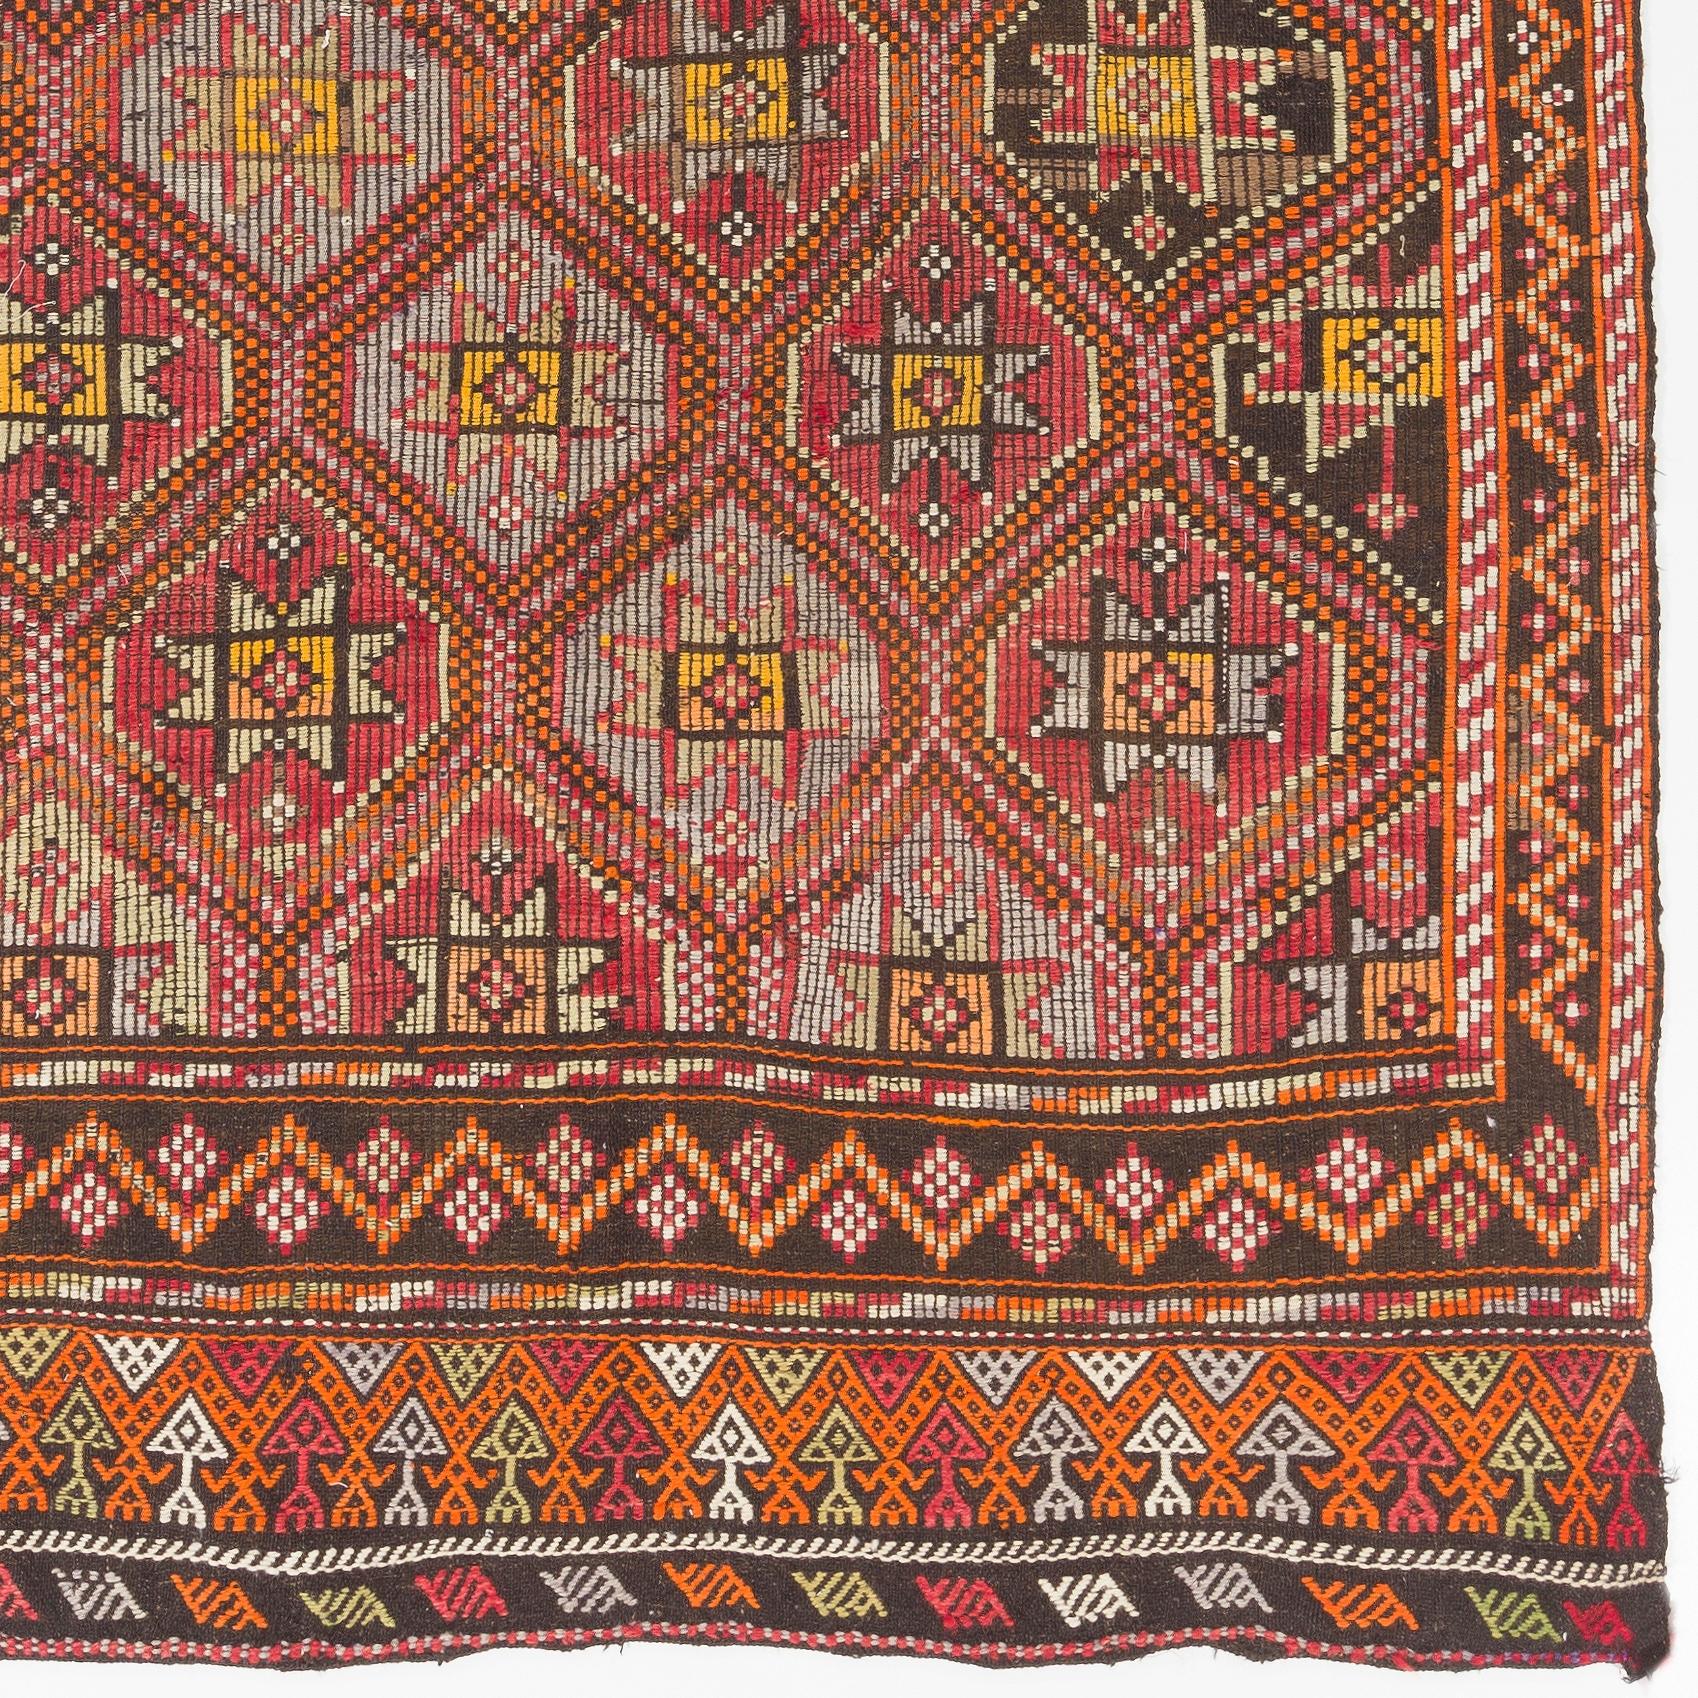 Hand-Woven 5.5x11 Ft Embroidered Handmade Jajim Kilim Rug with Interlocking Stars, Diamonds For Sale